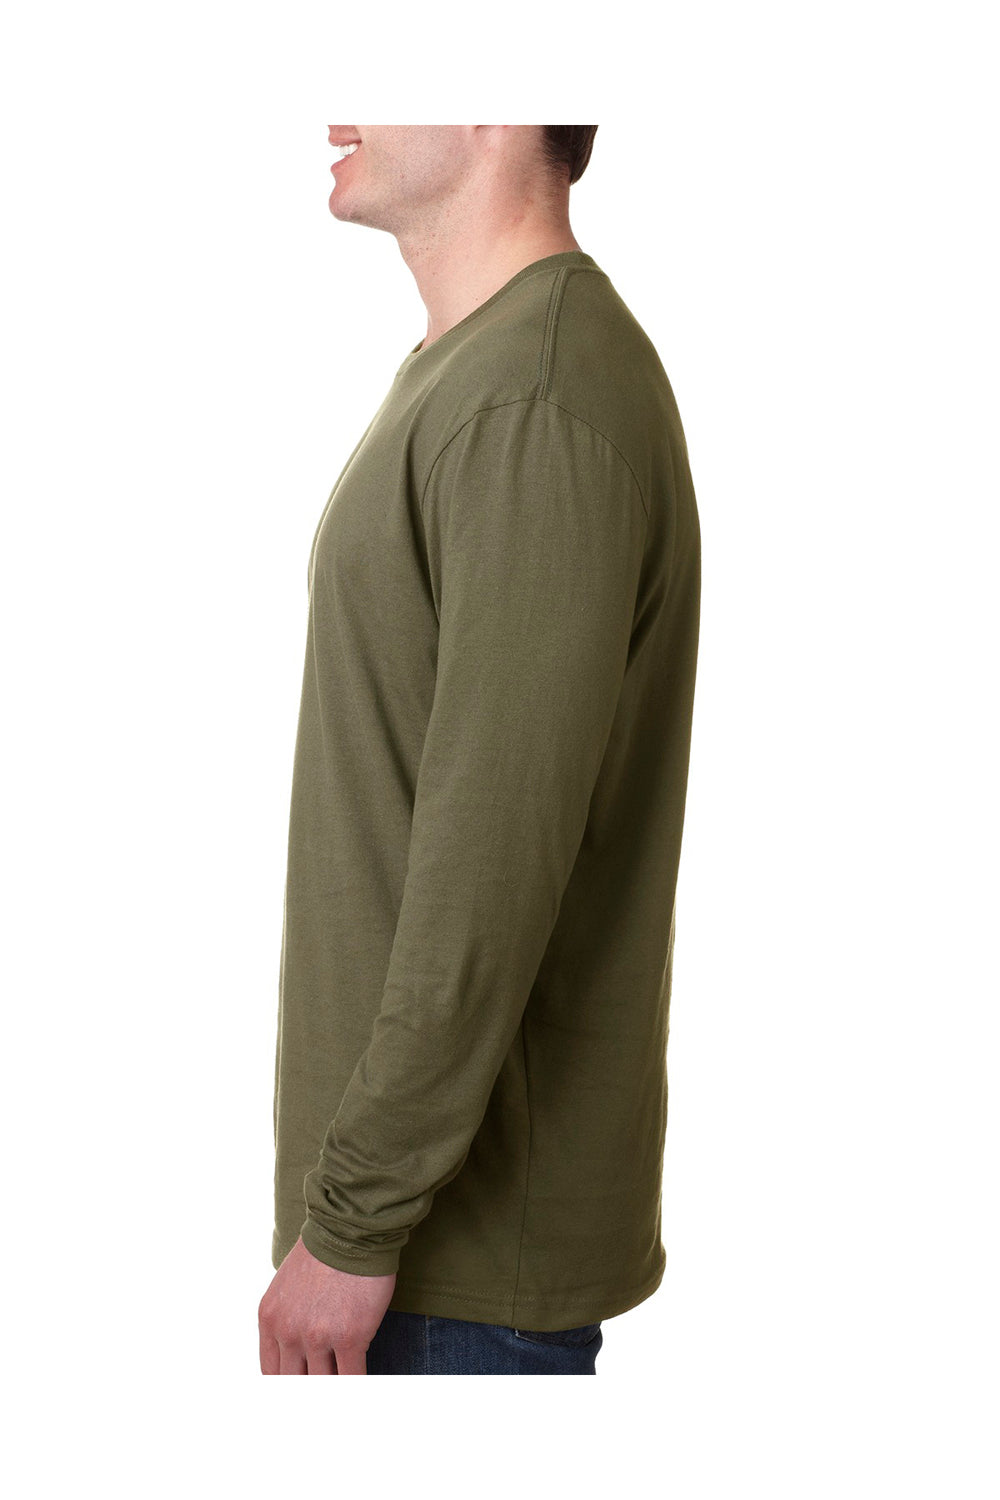 Next Level N3601 Mens Fine Jersey Long Sleeve Crewneck T-Shirt Military Green Side